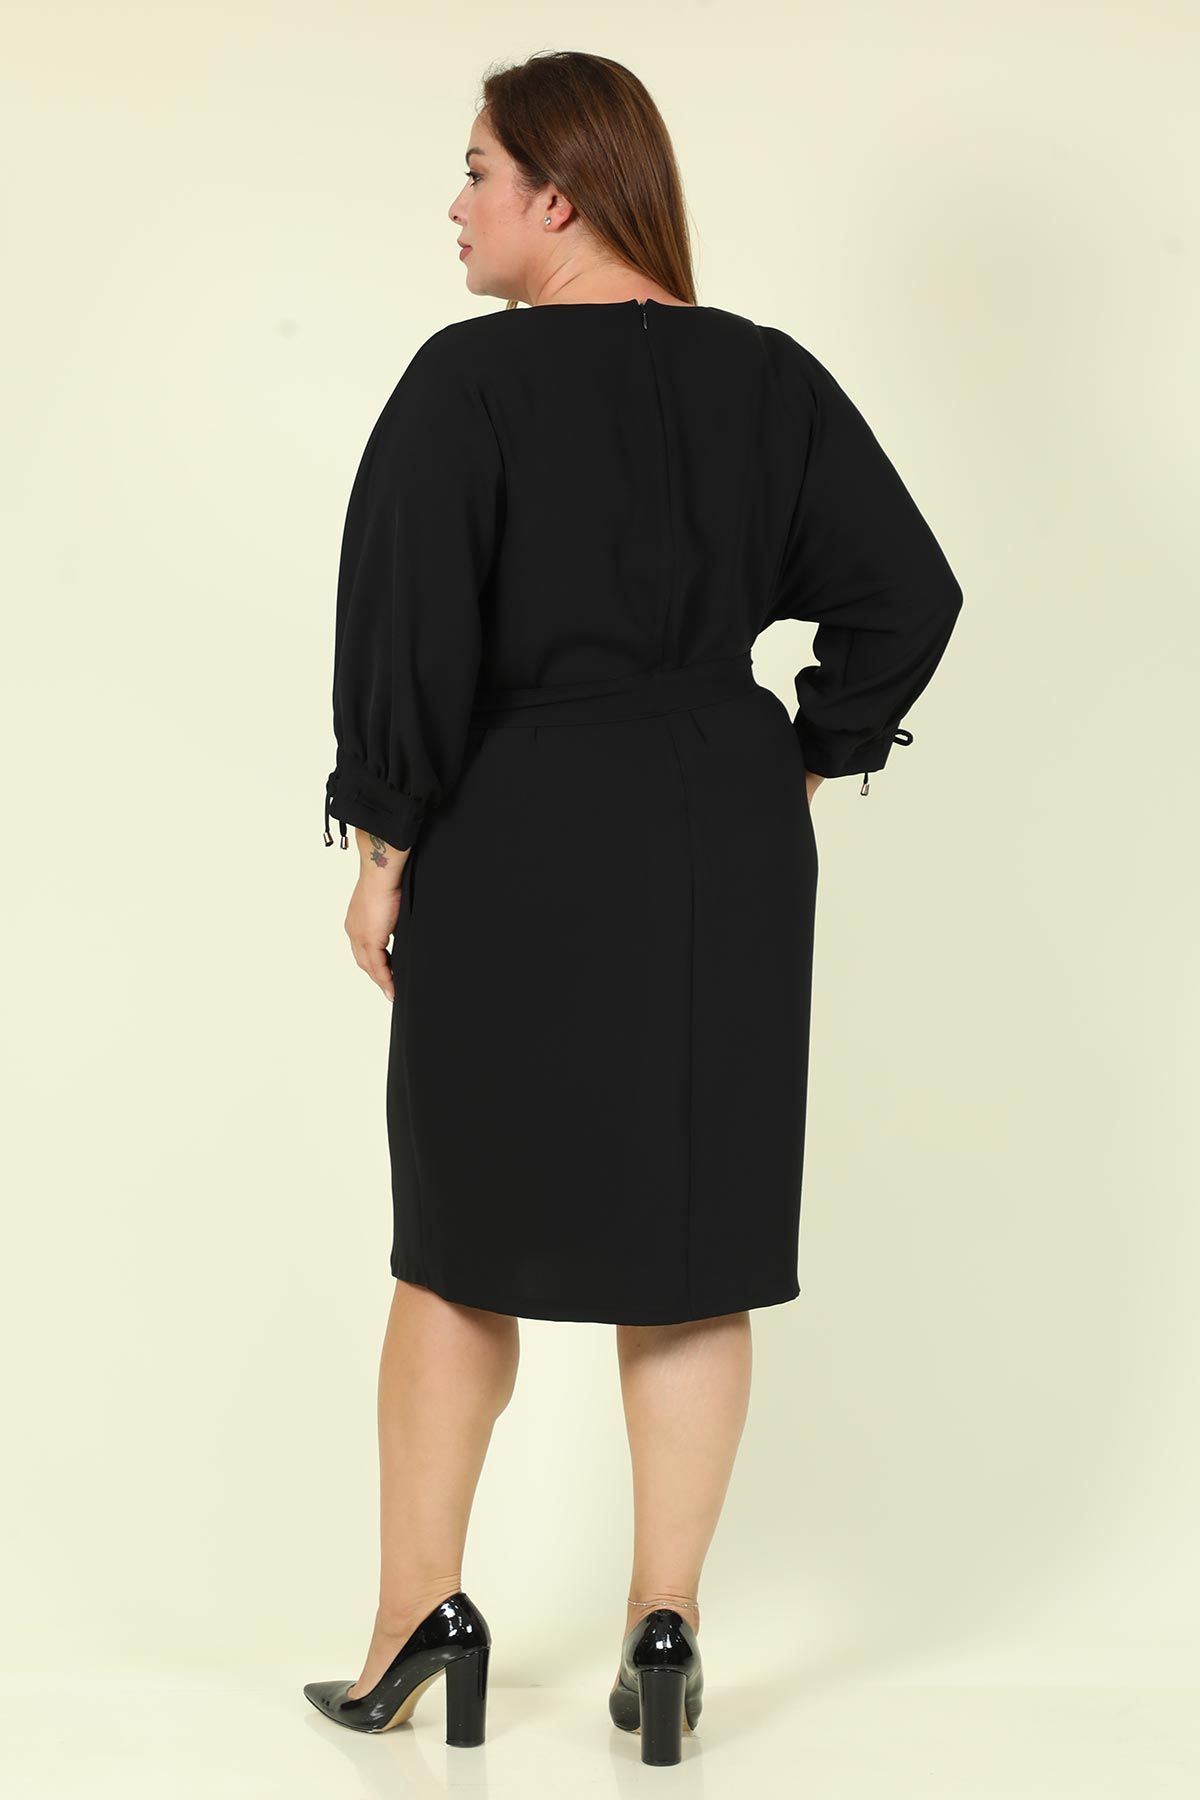 Estee 2349xl BLACK Plus Size Women Dress | Dosso Dossi